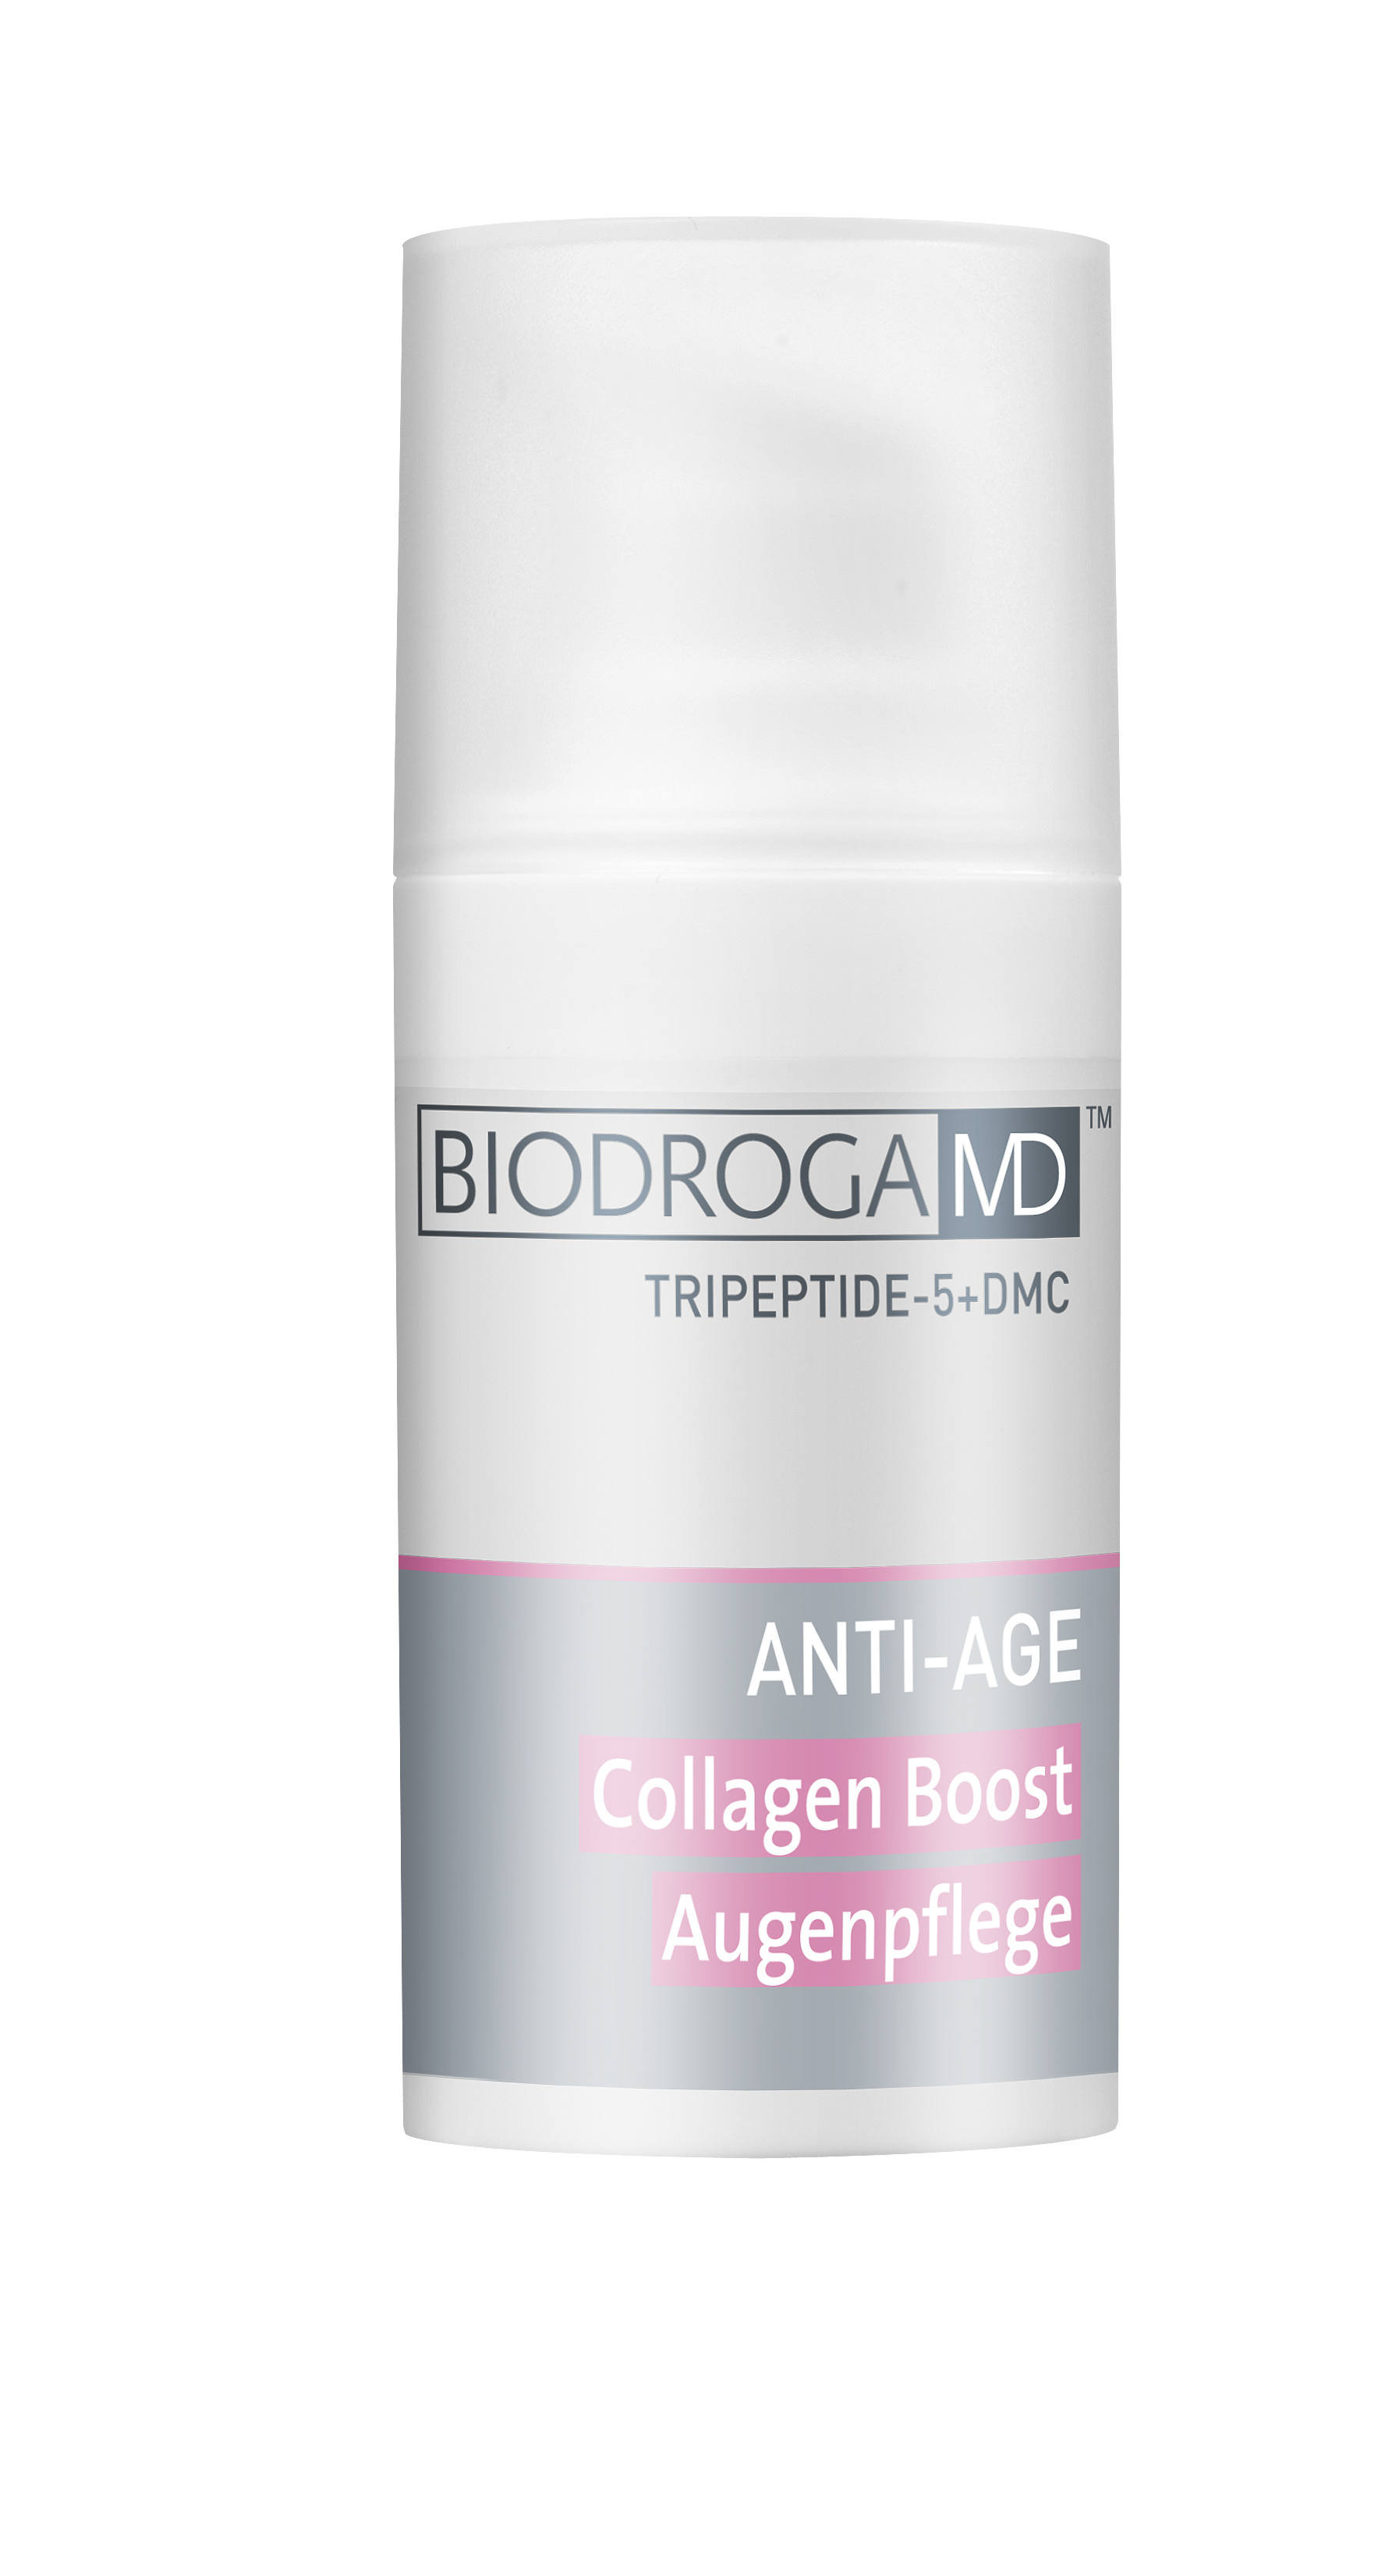 Biodroga MD Anti-Age Collagen Boost Eye Care 15ml